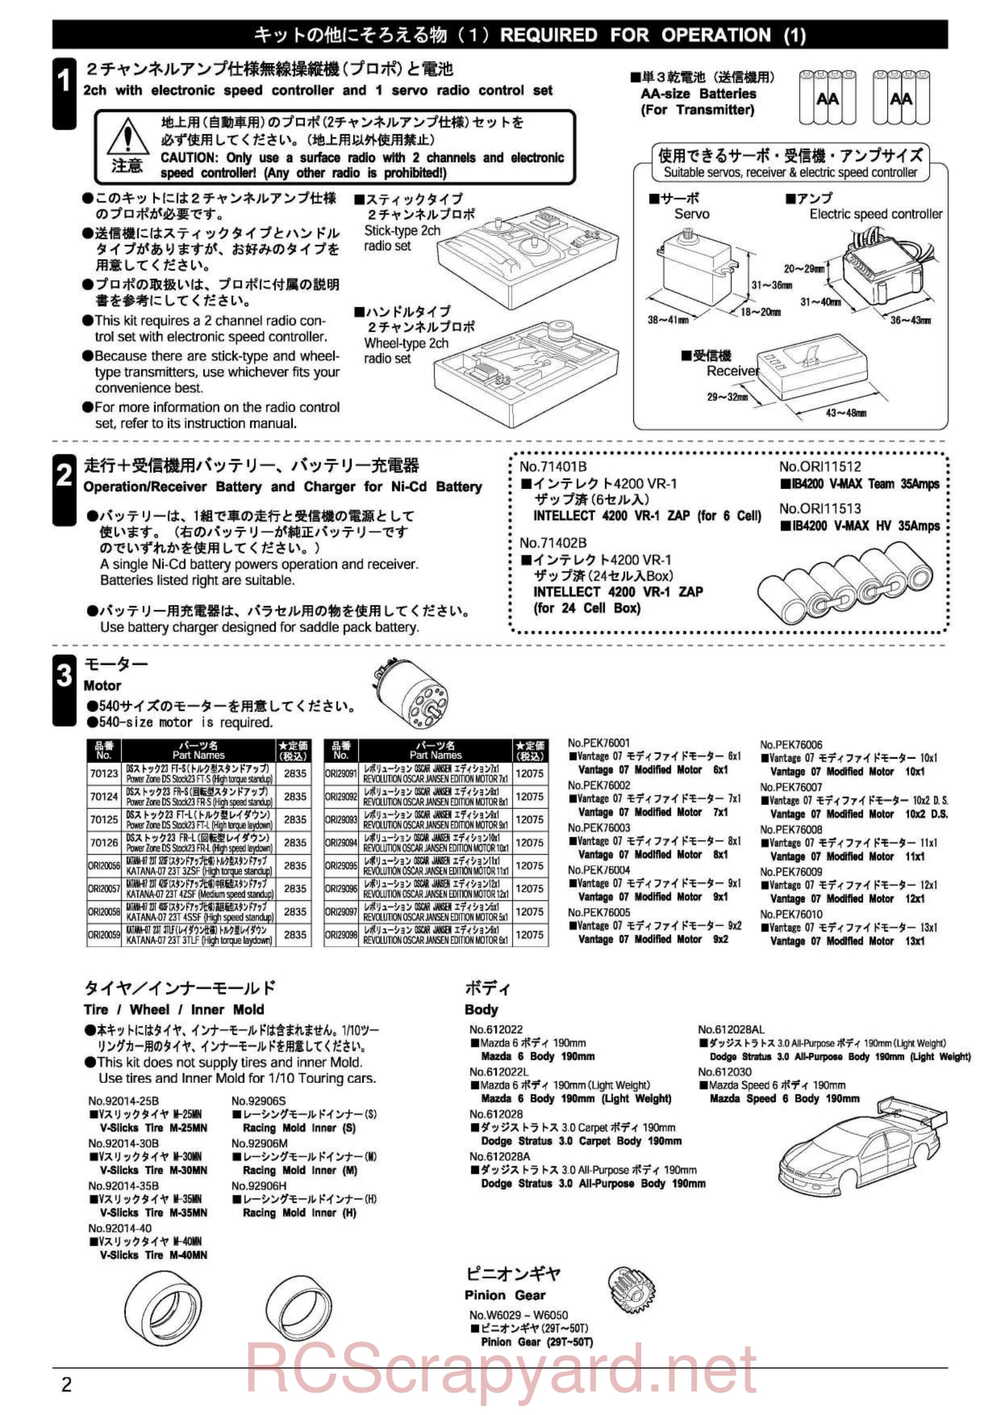 Kyosho - 30023 - Stalion-Shin - Manual - Page 02